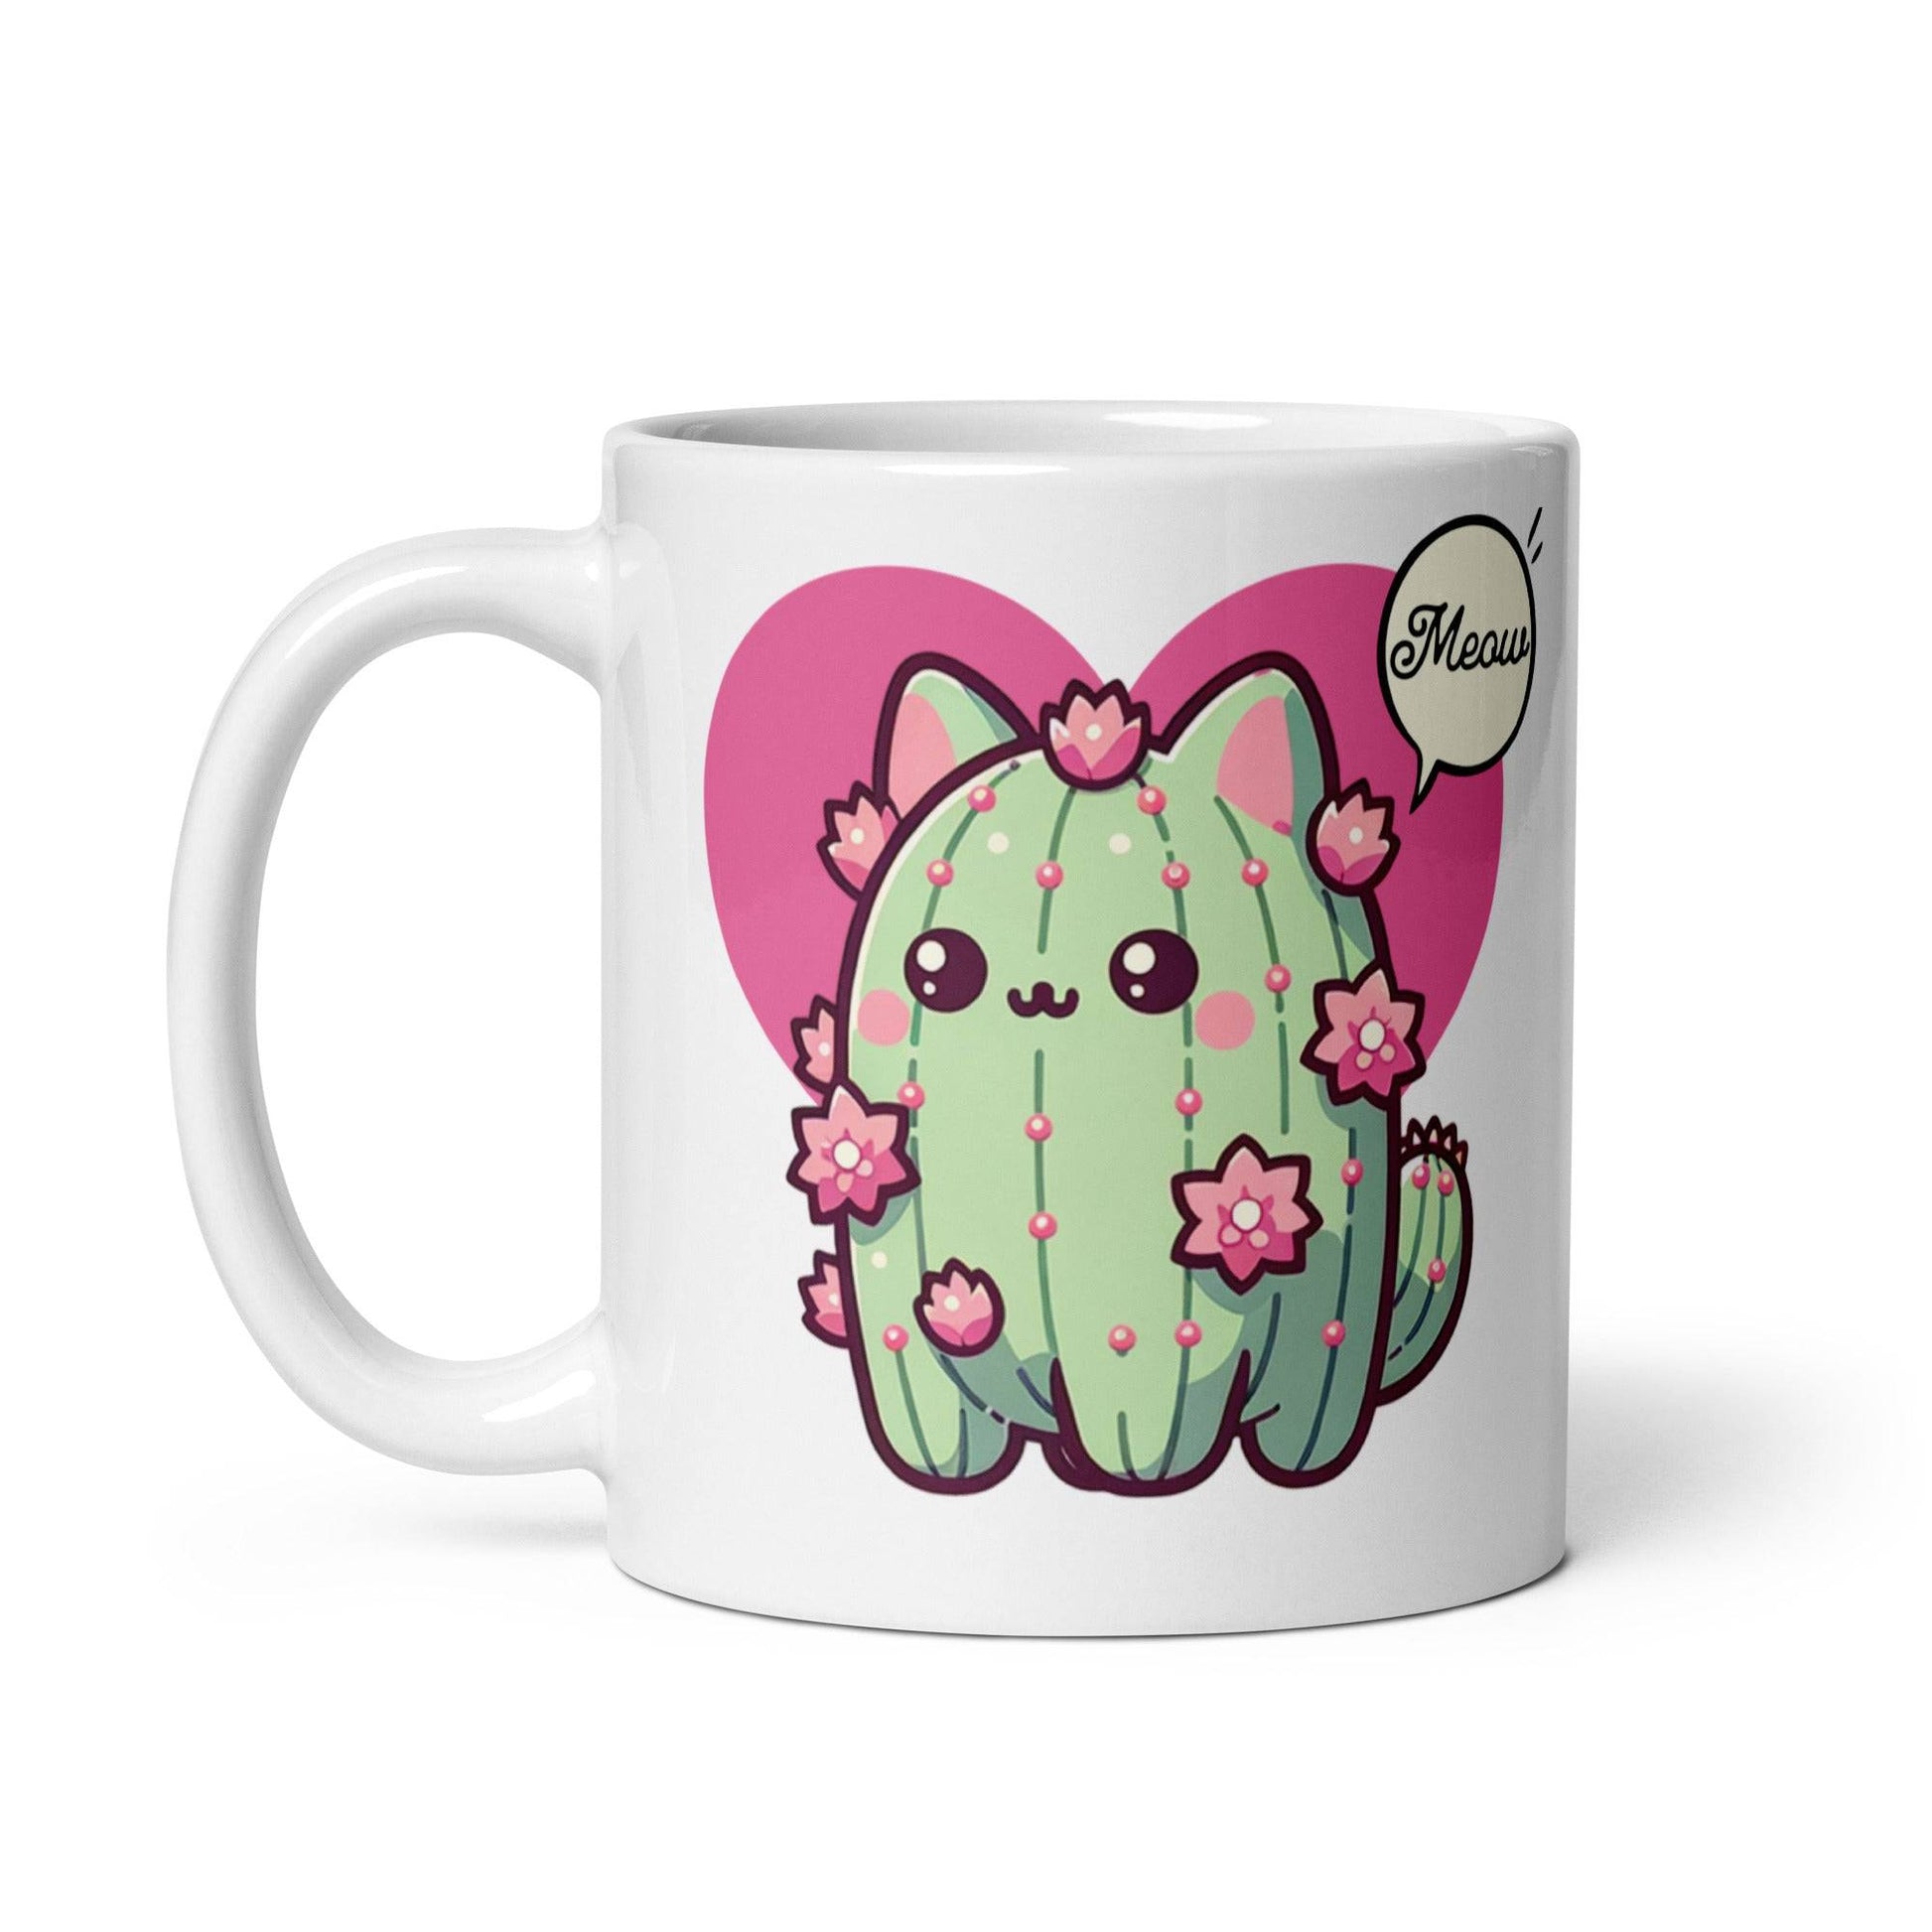 Adorable Cat & Cactus Mug - Unique Kawaii Style, Cozy Tea Time Companion Littlecutiepaws